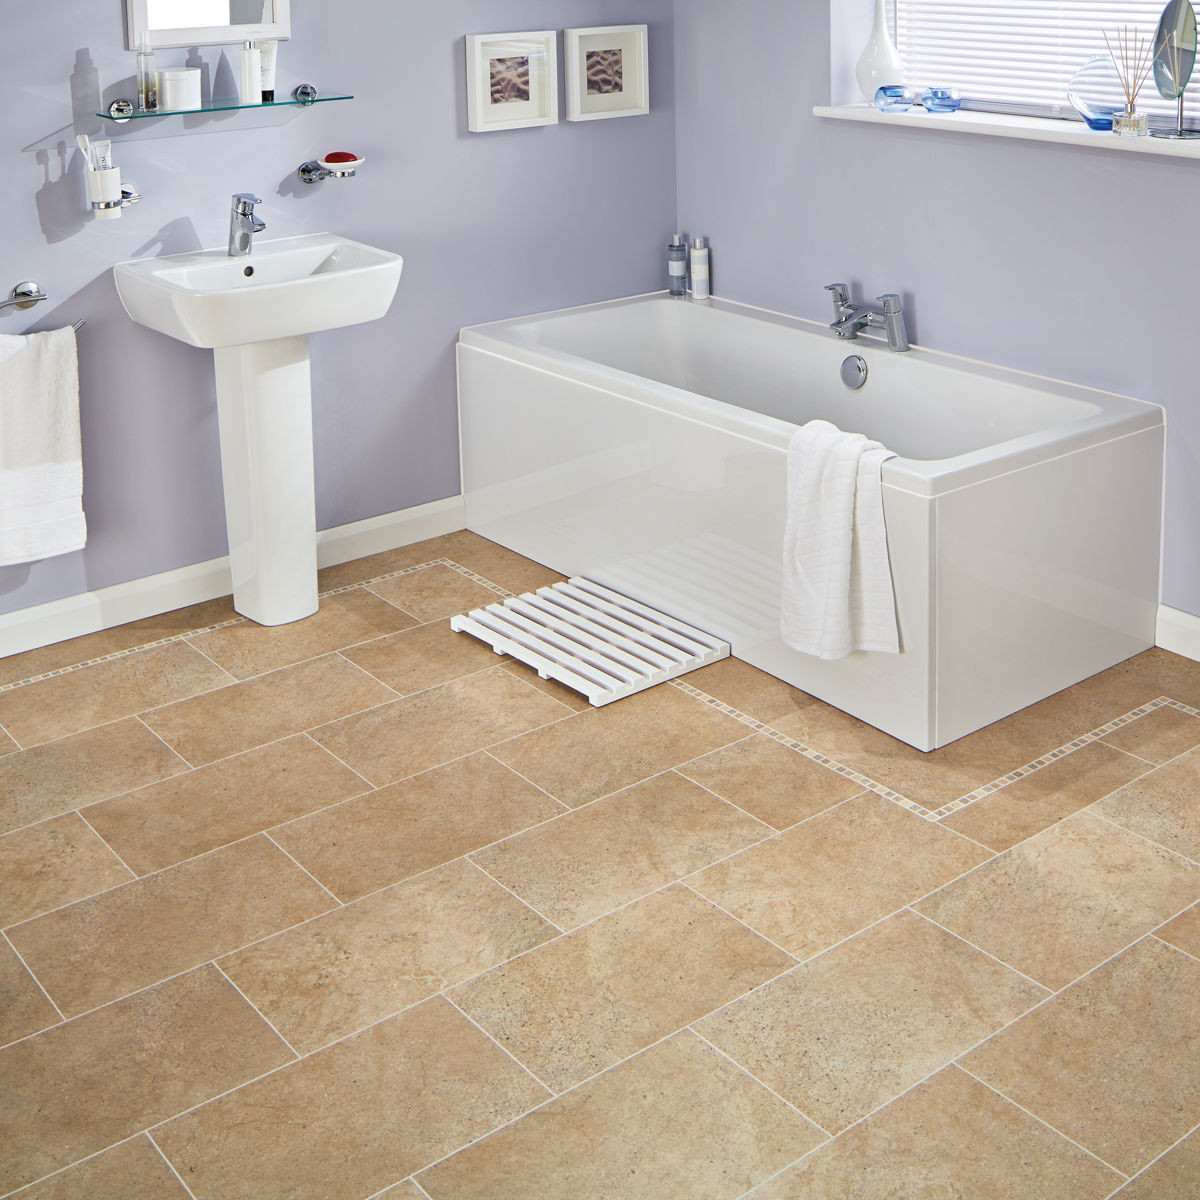 Stone Floor Tiles Bathroom
 Karndean Knight Tile Bath Stone